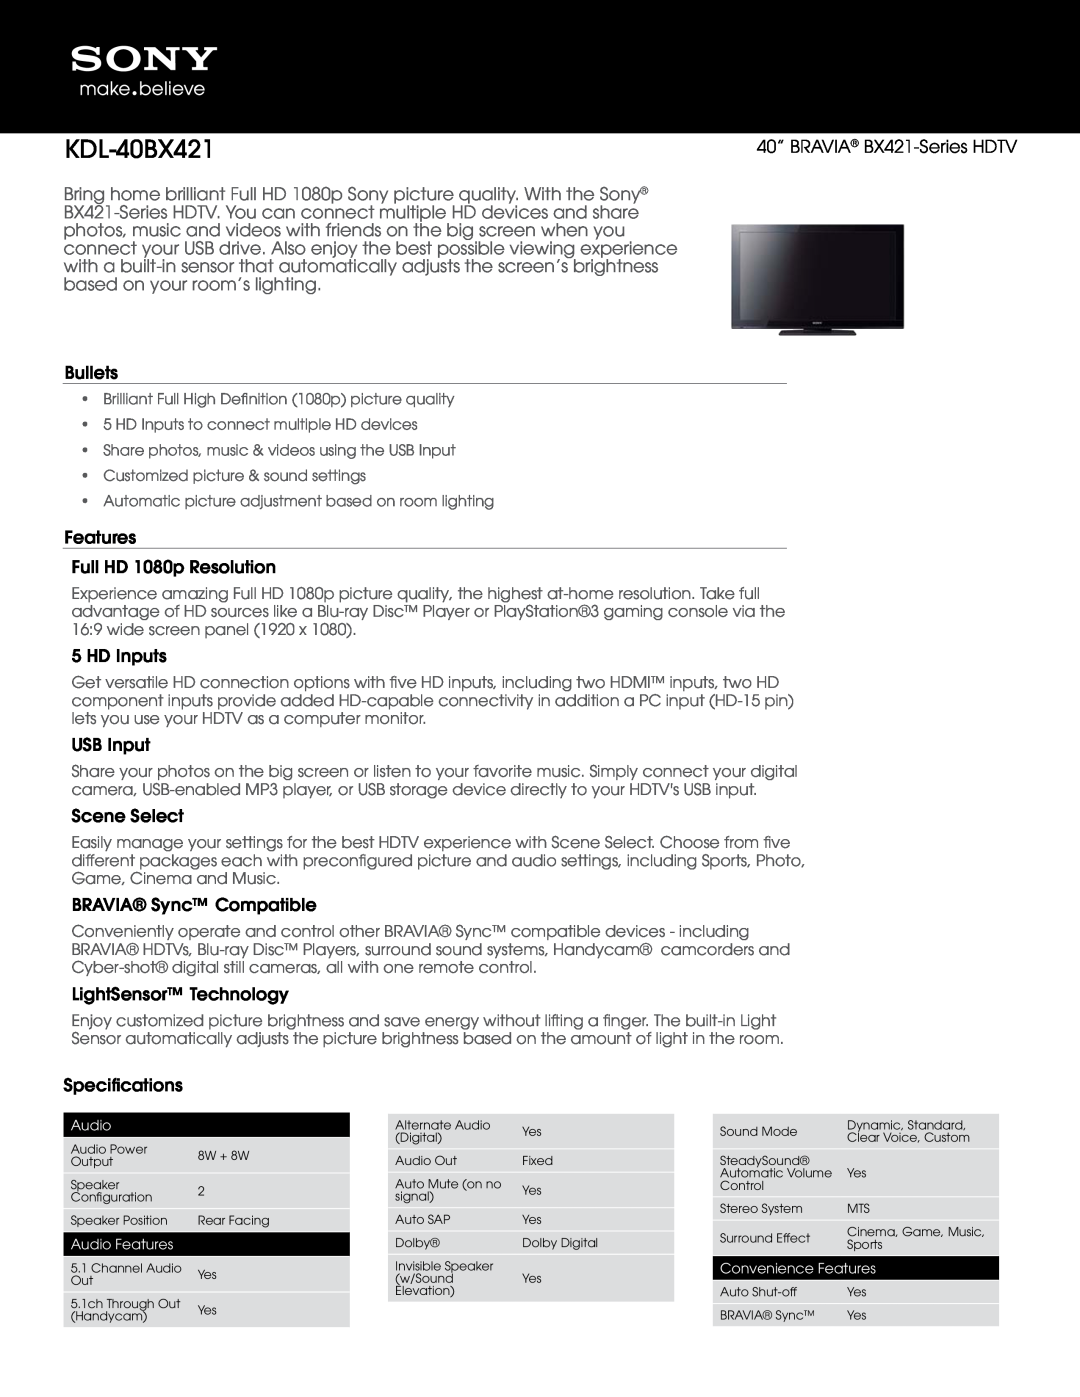 Sony manual KDL-40BX421, 40” BRAVIA BX421-Series HDTV, Bullets, Features Full HD 1080p Resolution, HD Inputs, USB Input 